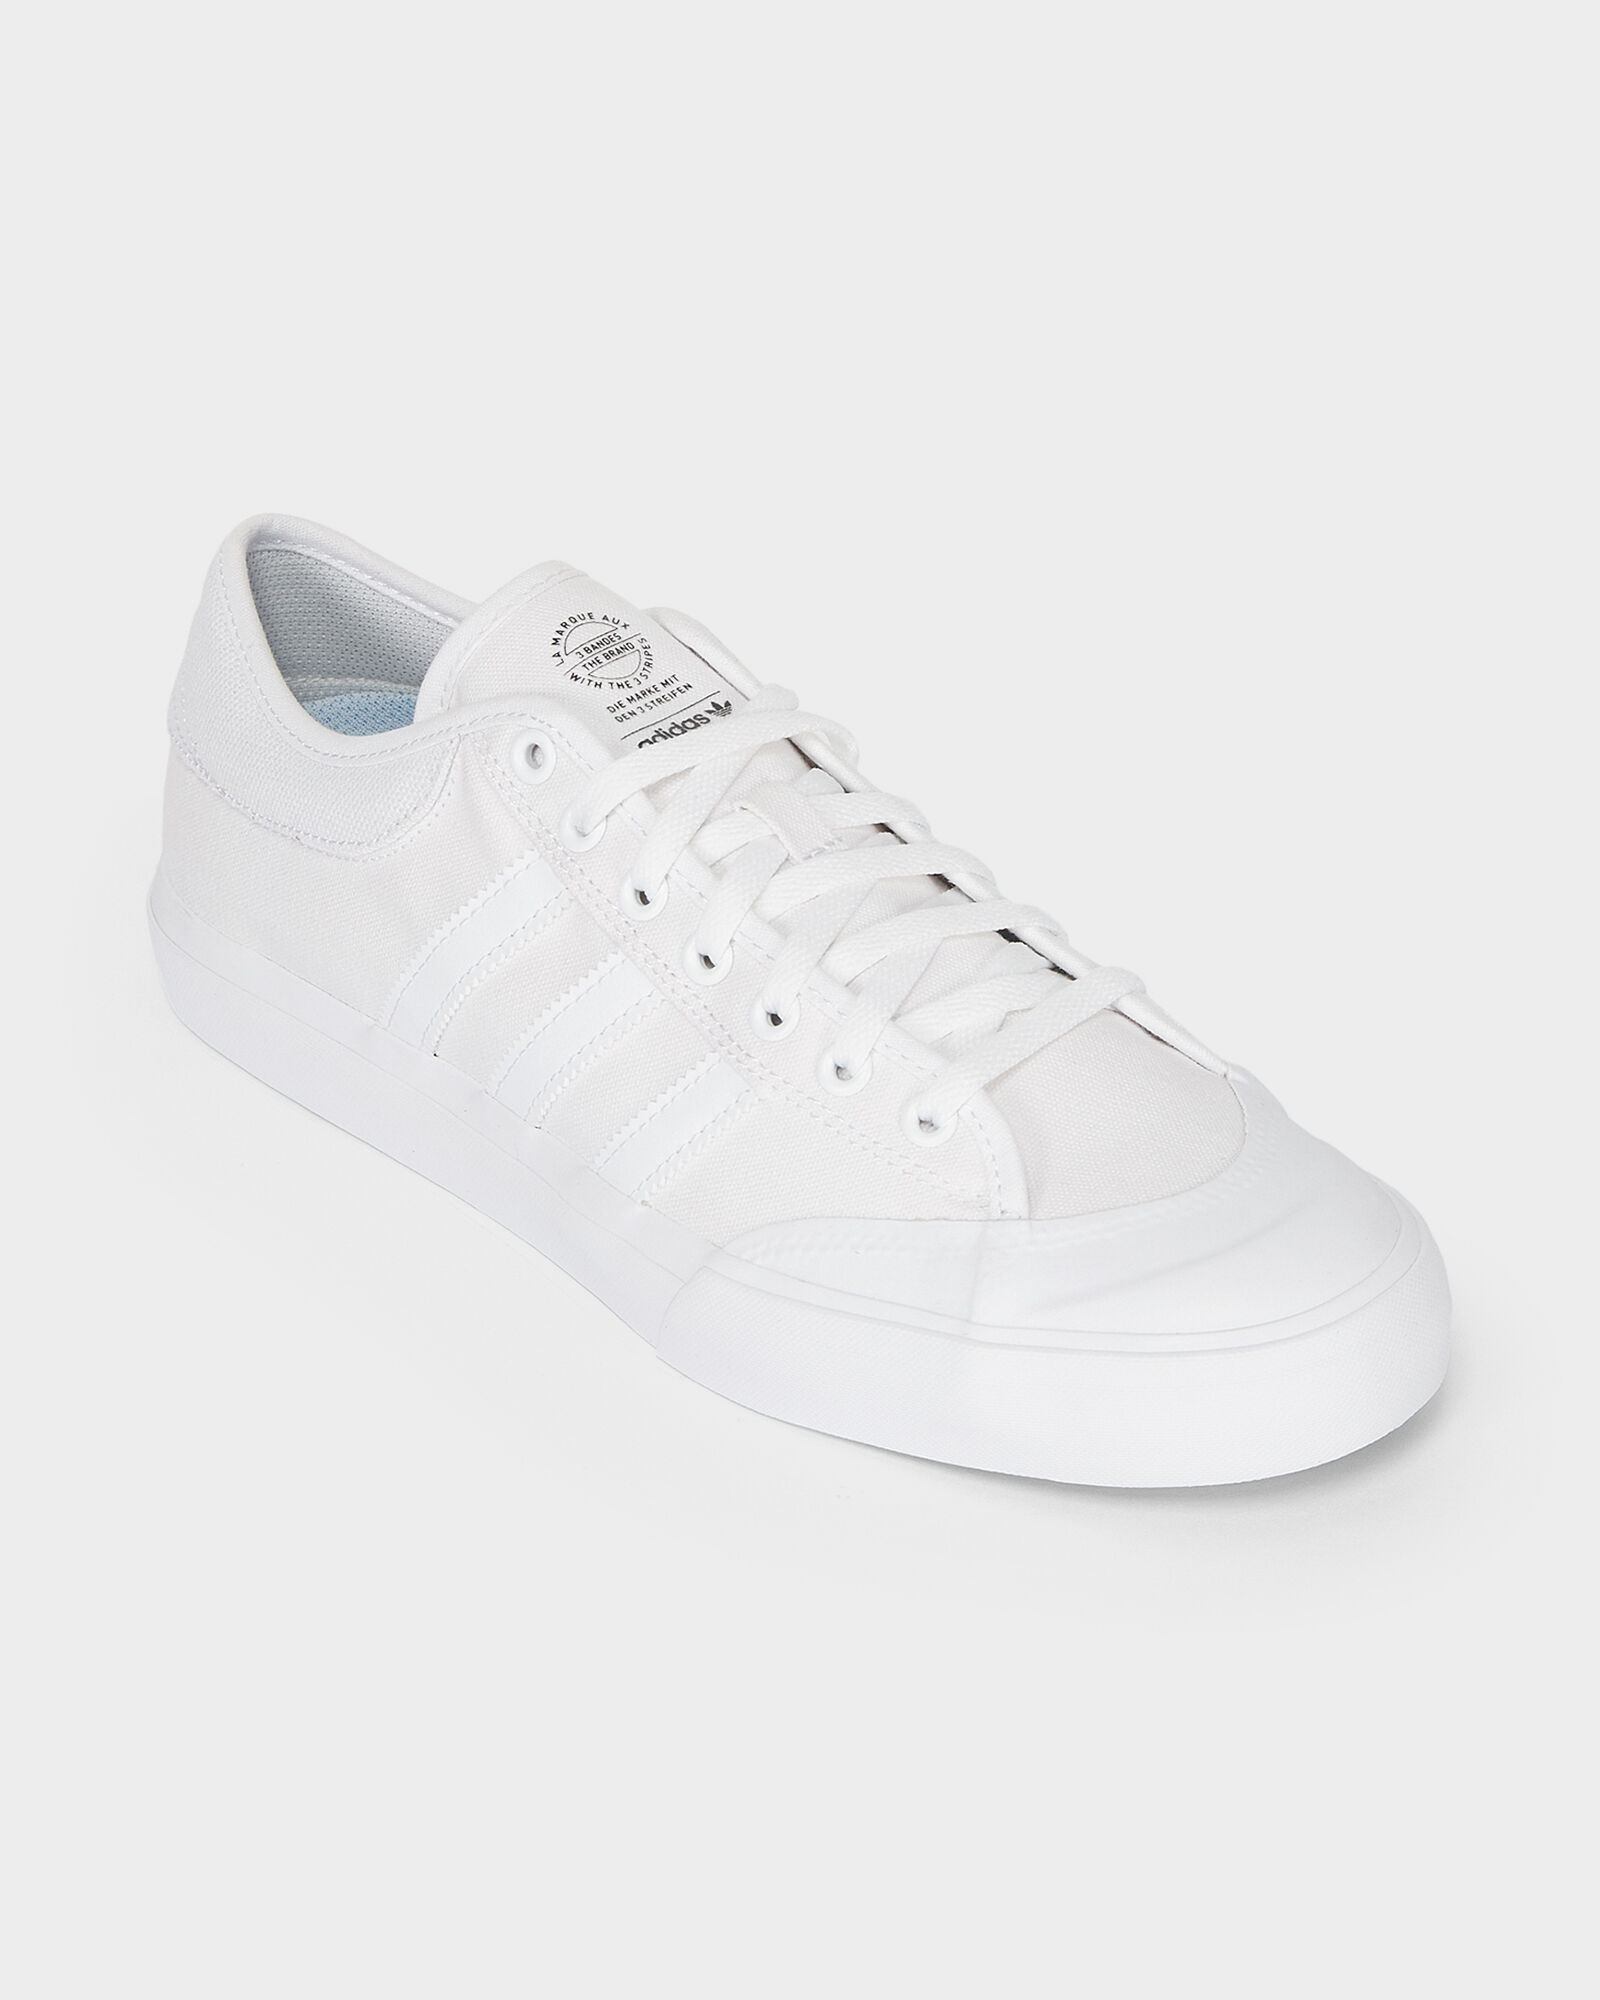 adidas matchcourt white size 8